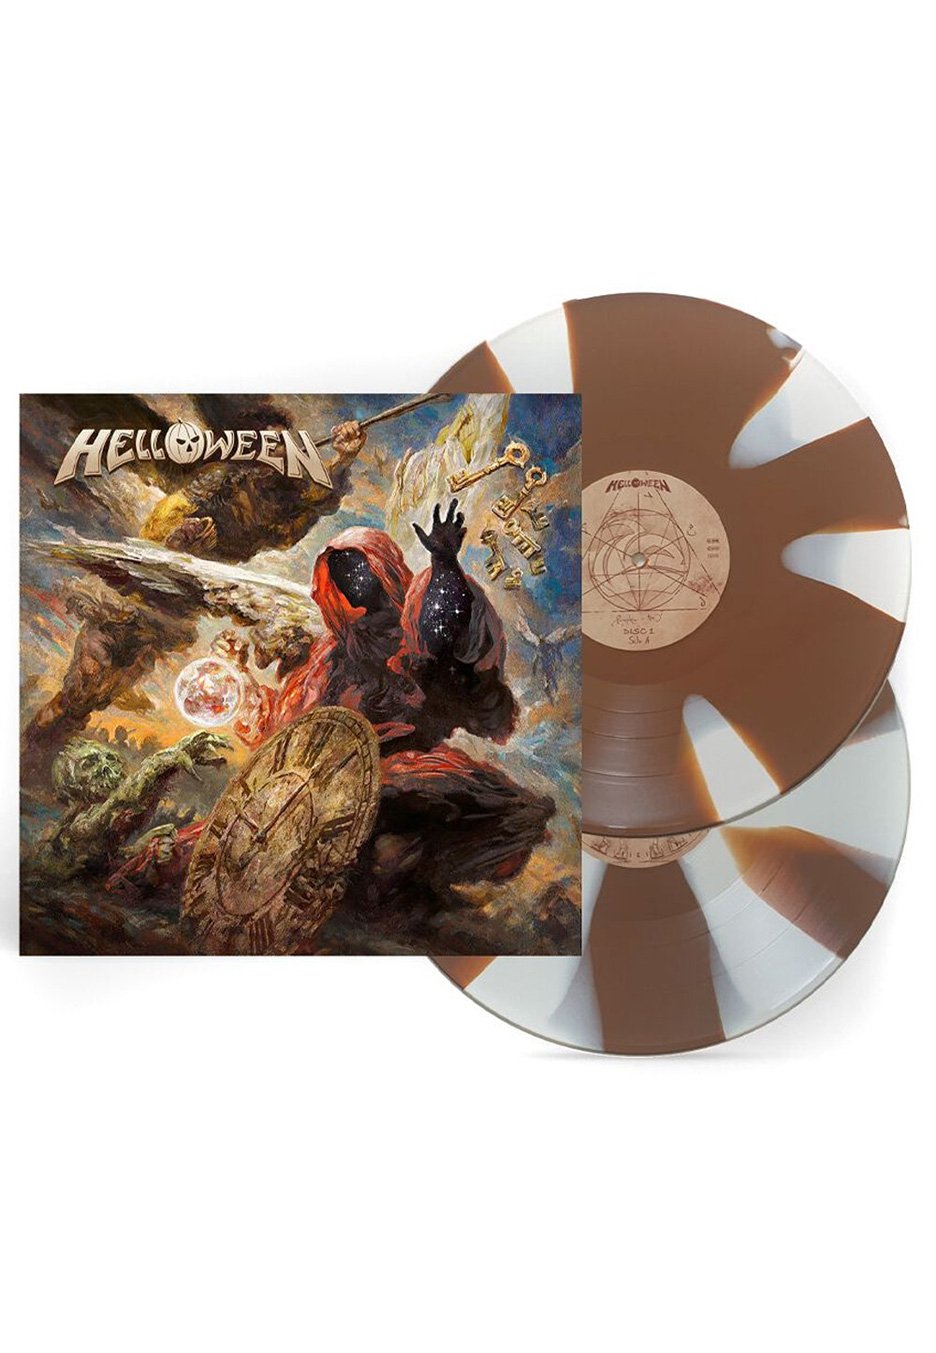 Helloween - Helloween White/Brown - Colored 2 Vinyl